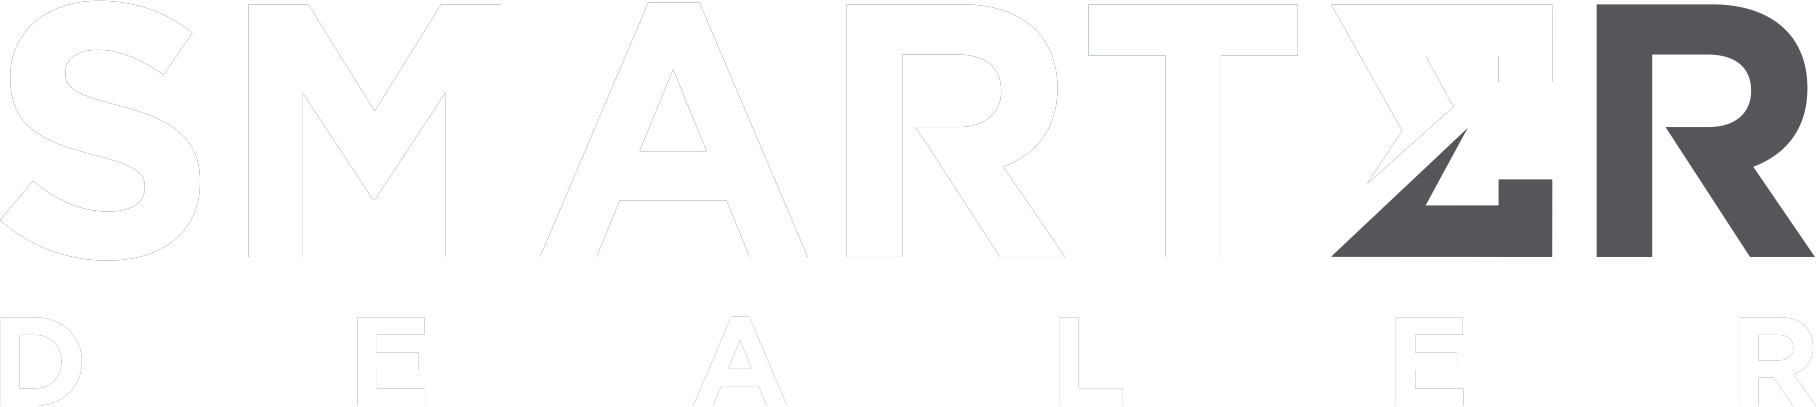 smarter-logo-white